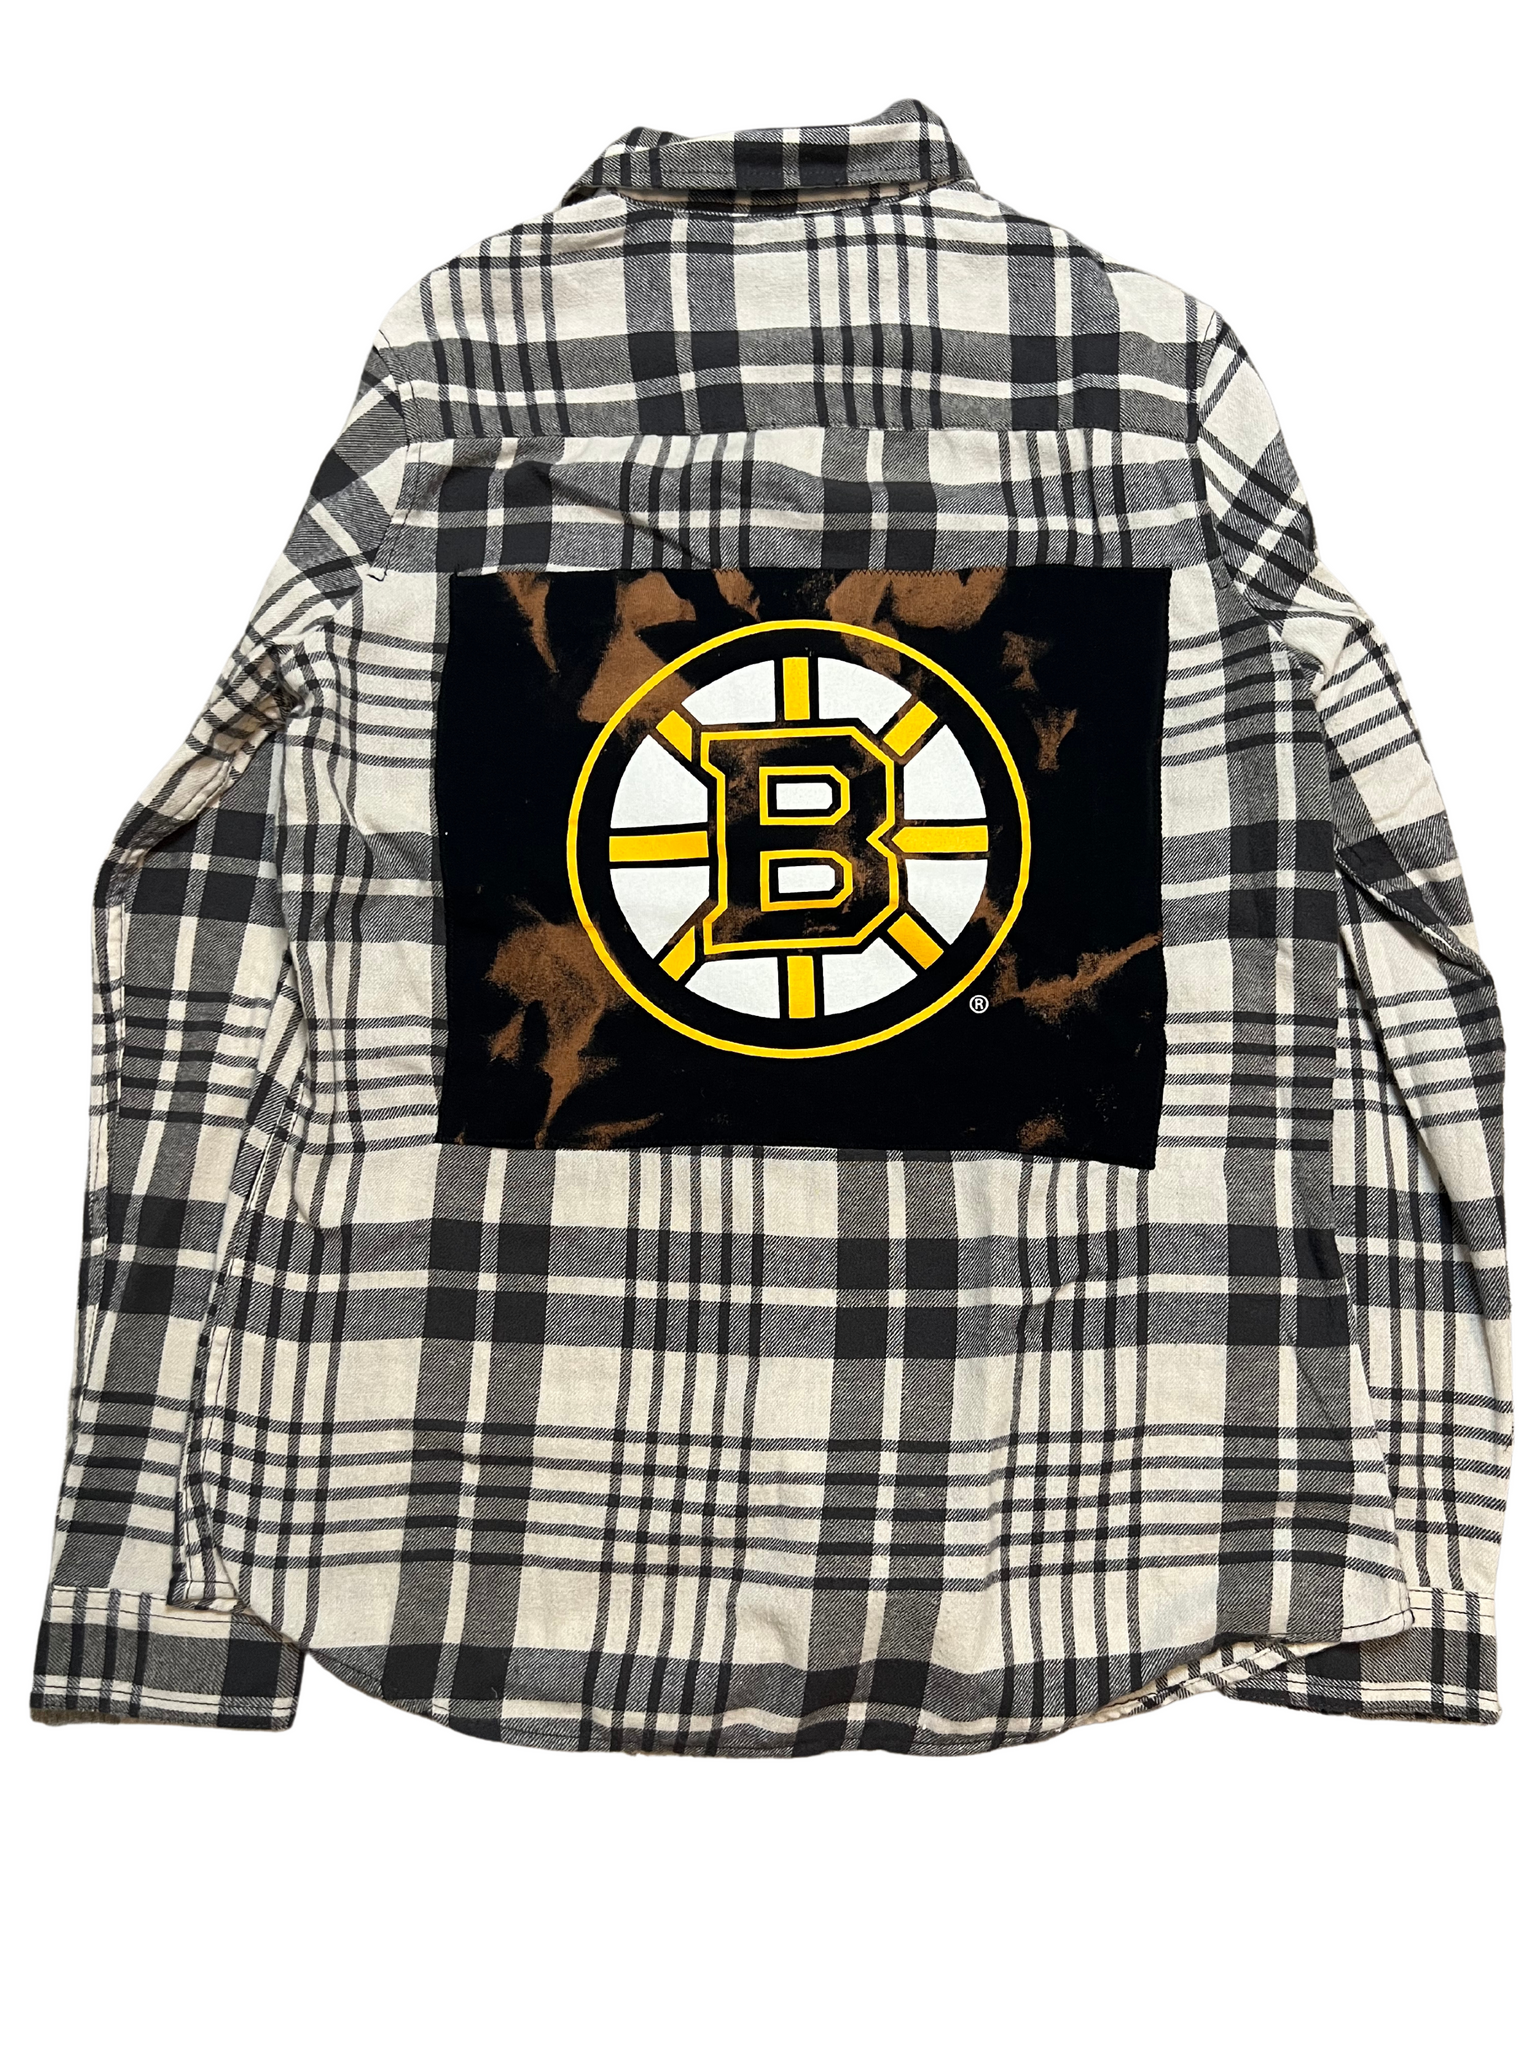 NHL, Tops, Nhl Boston Bruins Plaid Flannel Button Up Shirt